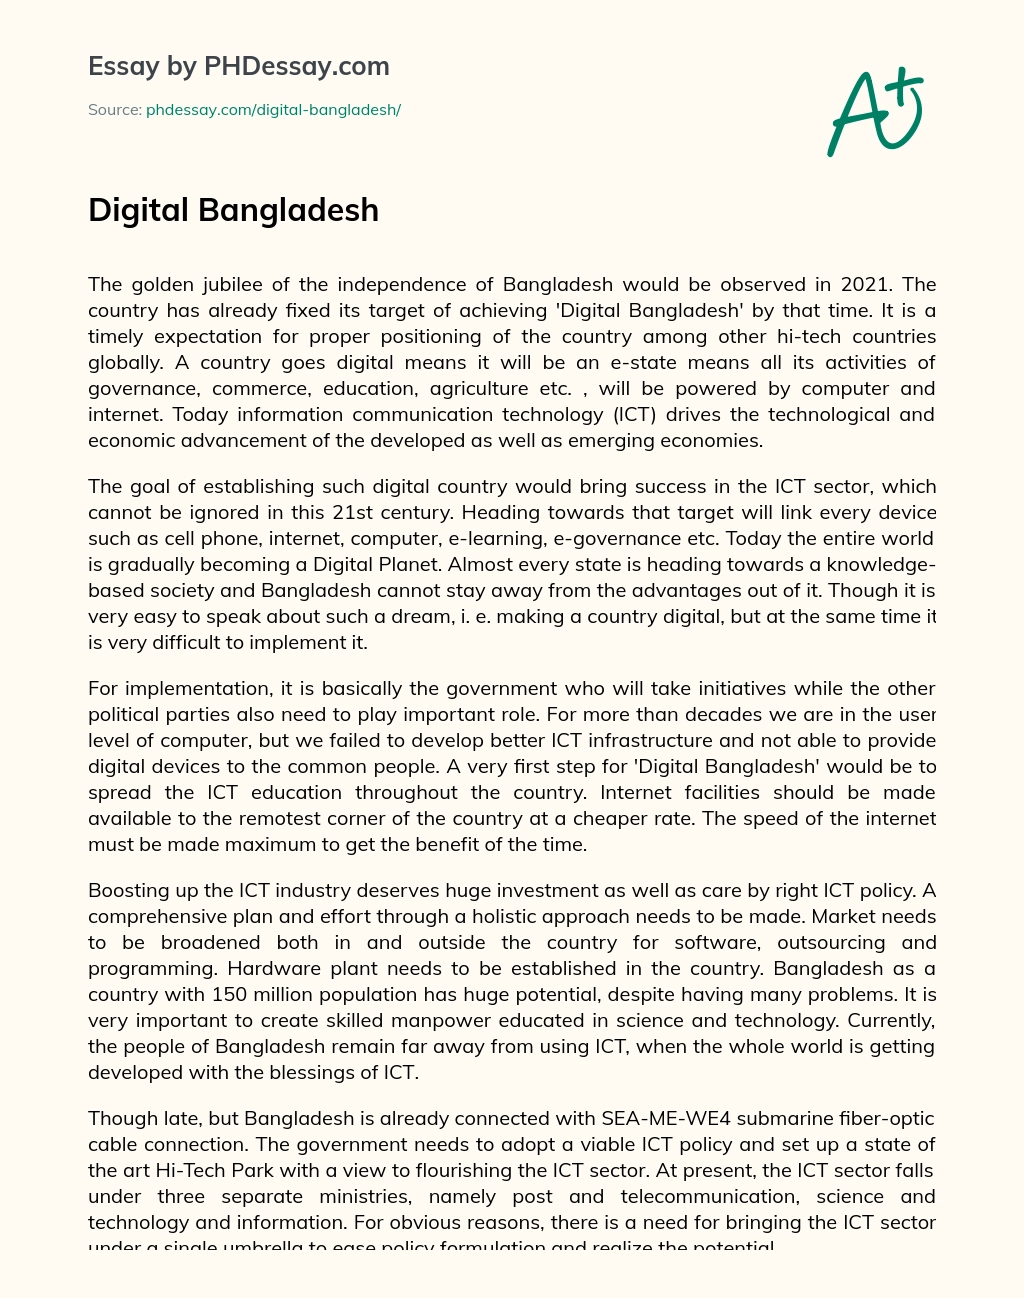 Digital Bangladesh essay